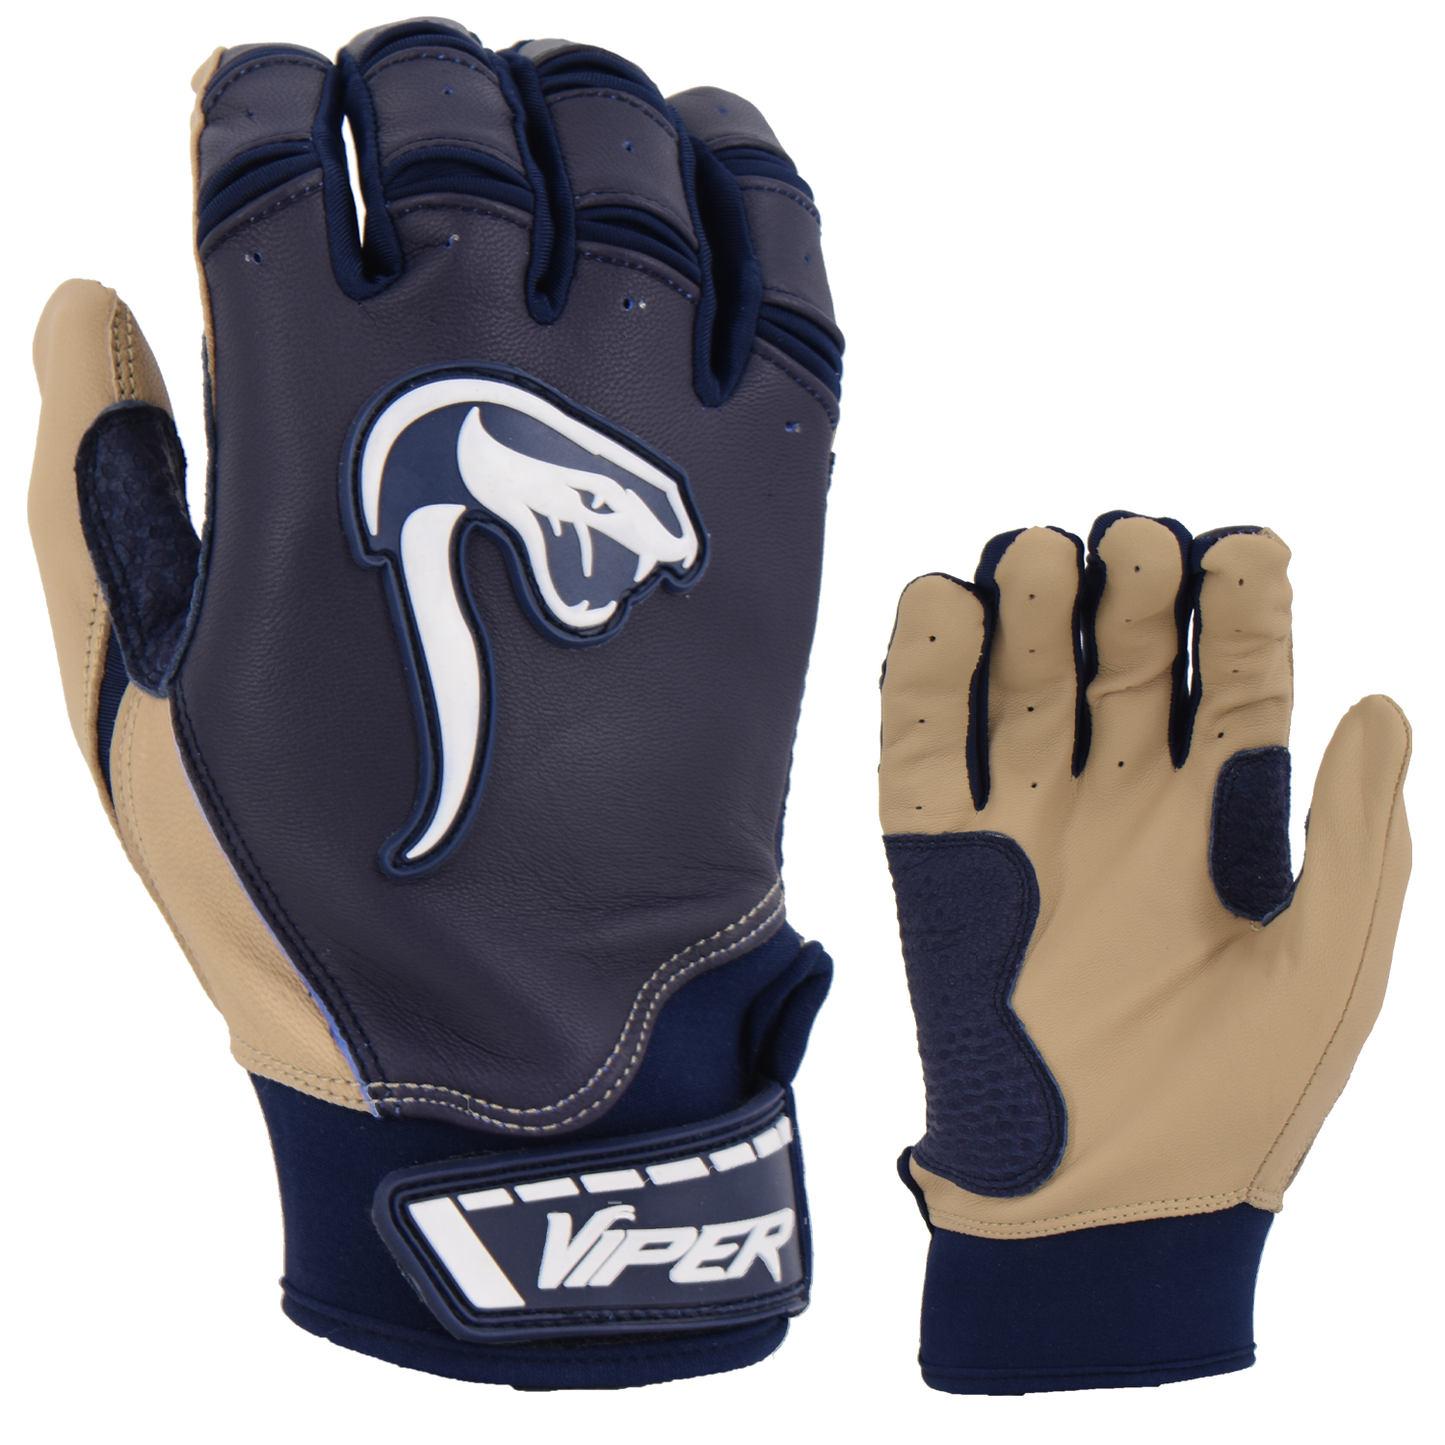 Viper Grindstone Short Cuff Batting Glove - Navy/Tan